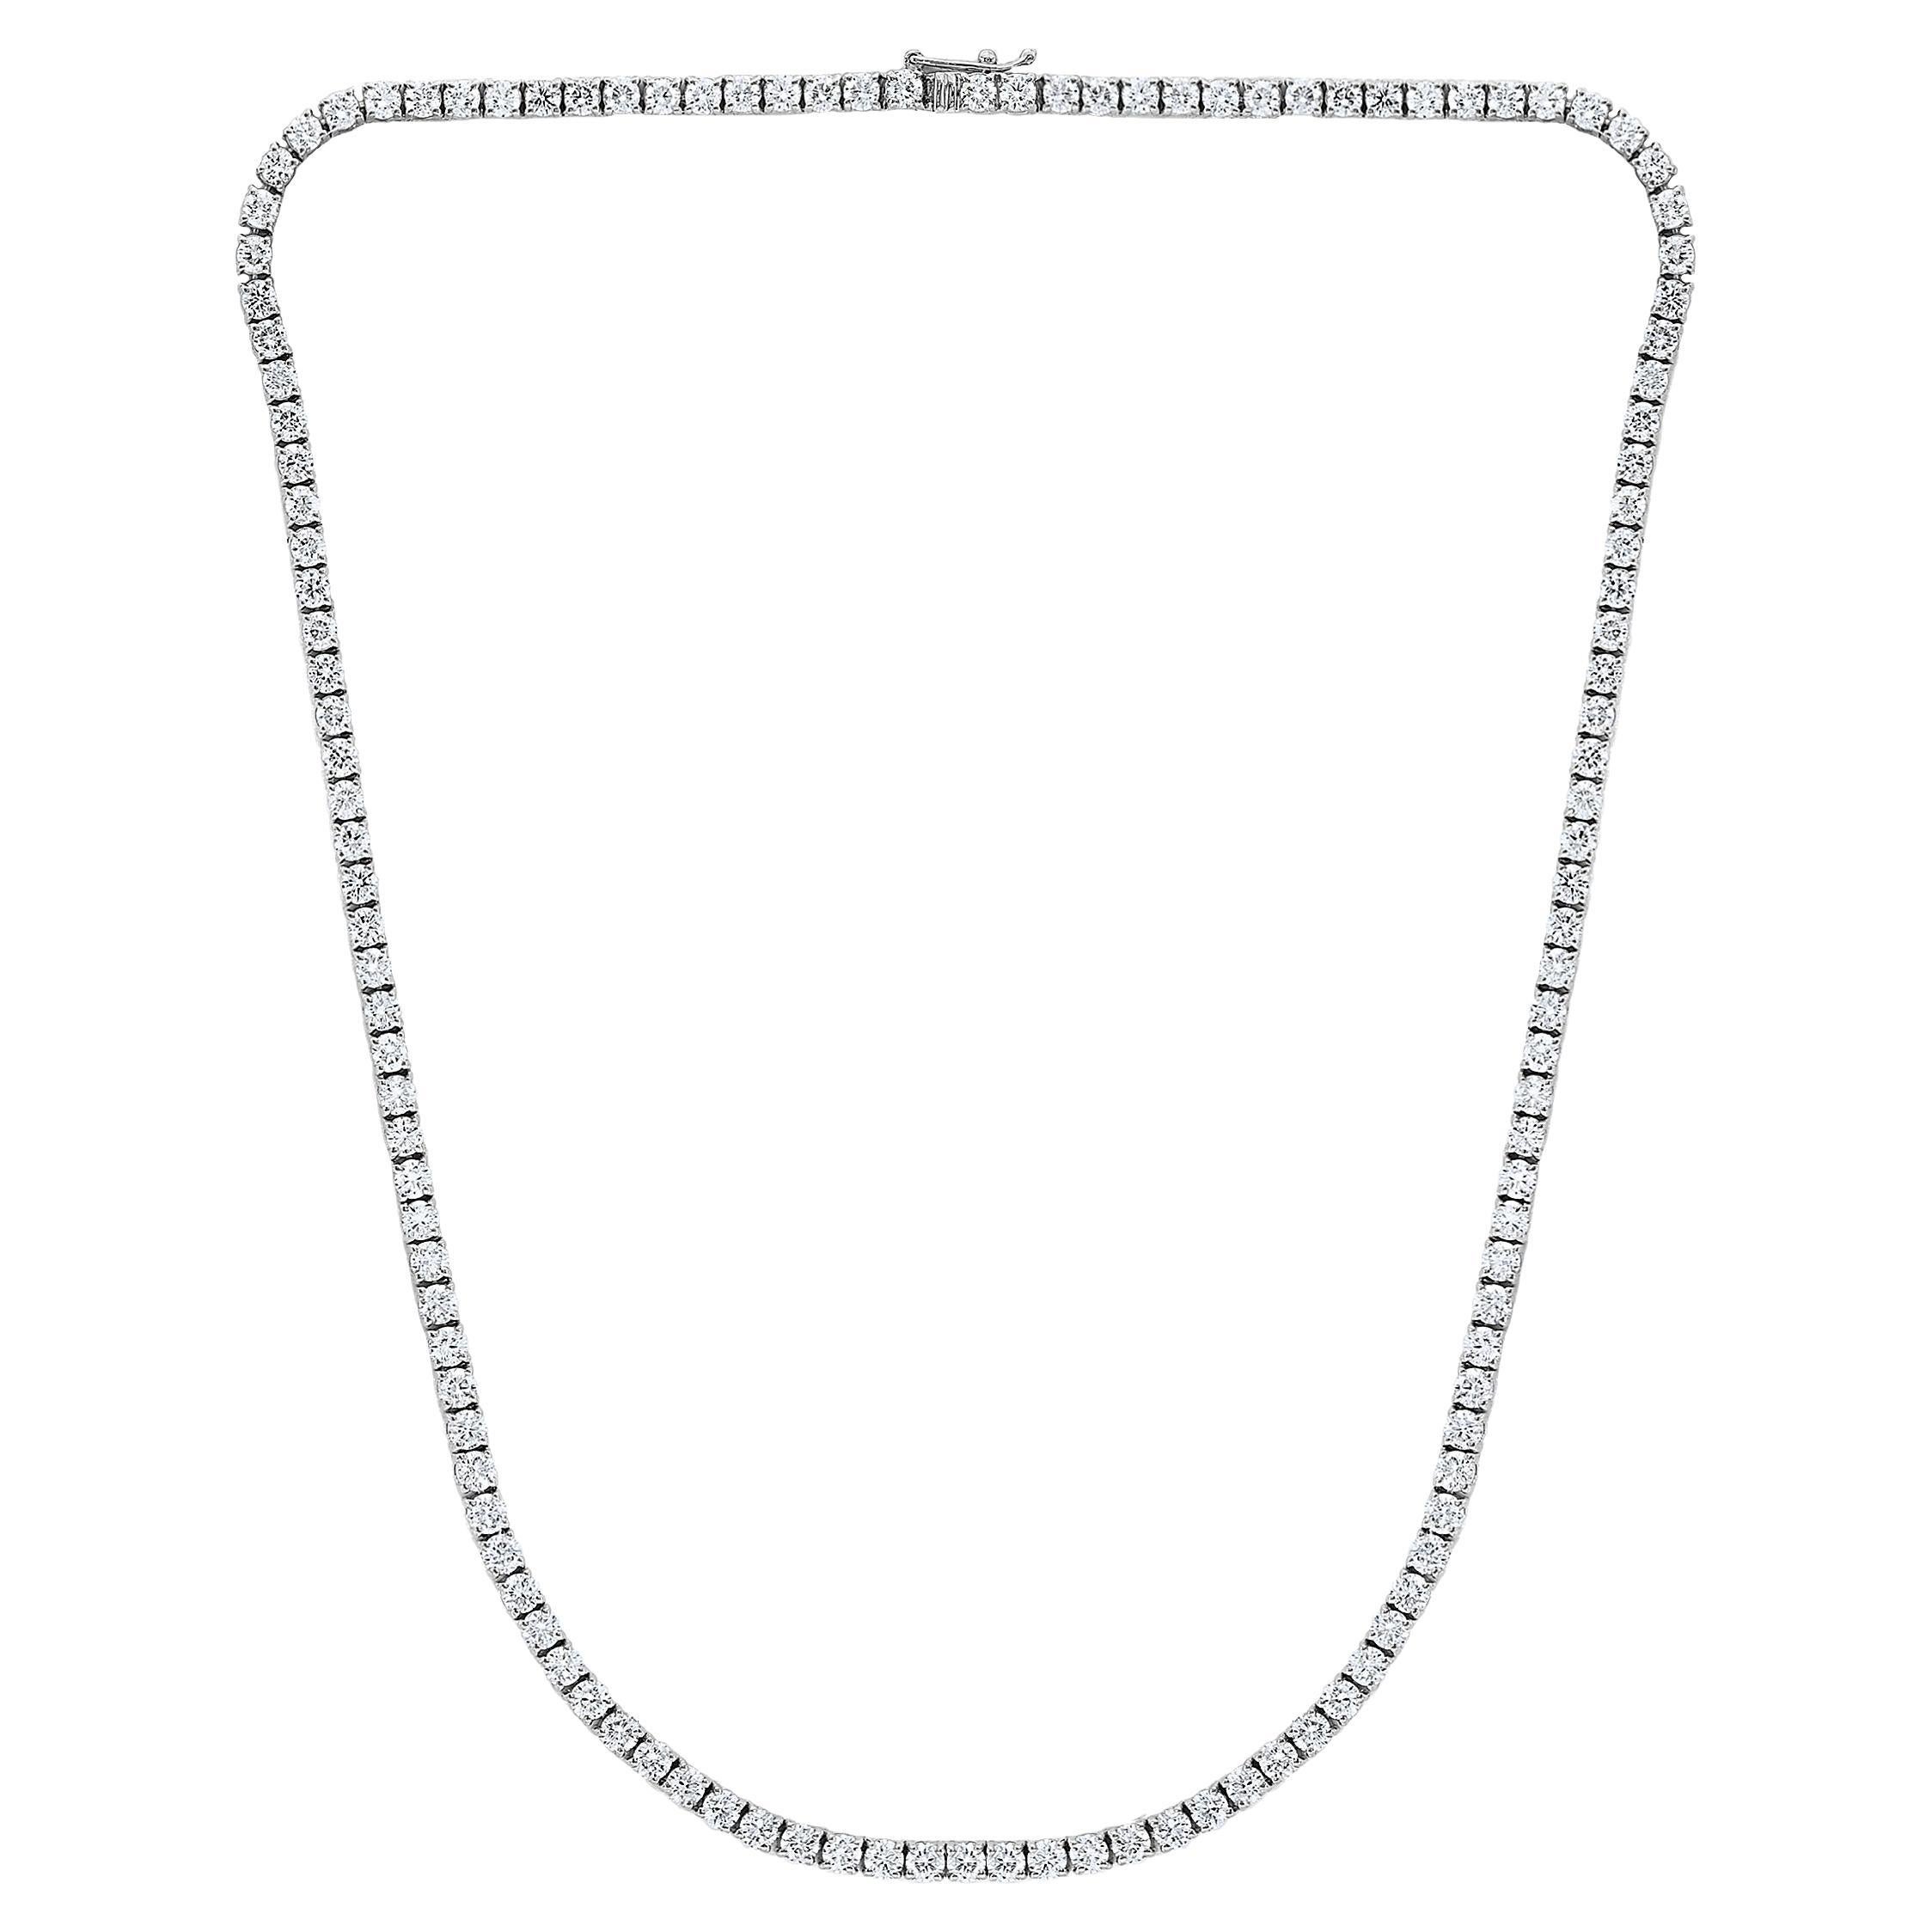 13.01 Carat Diamond Tennis Necklace in 14K White Gold